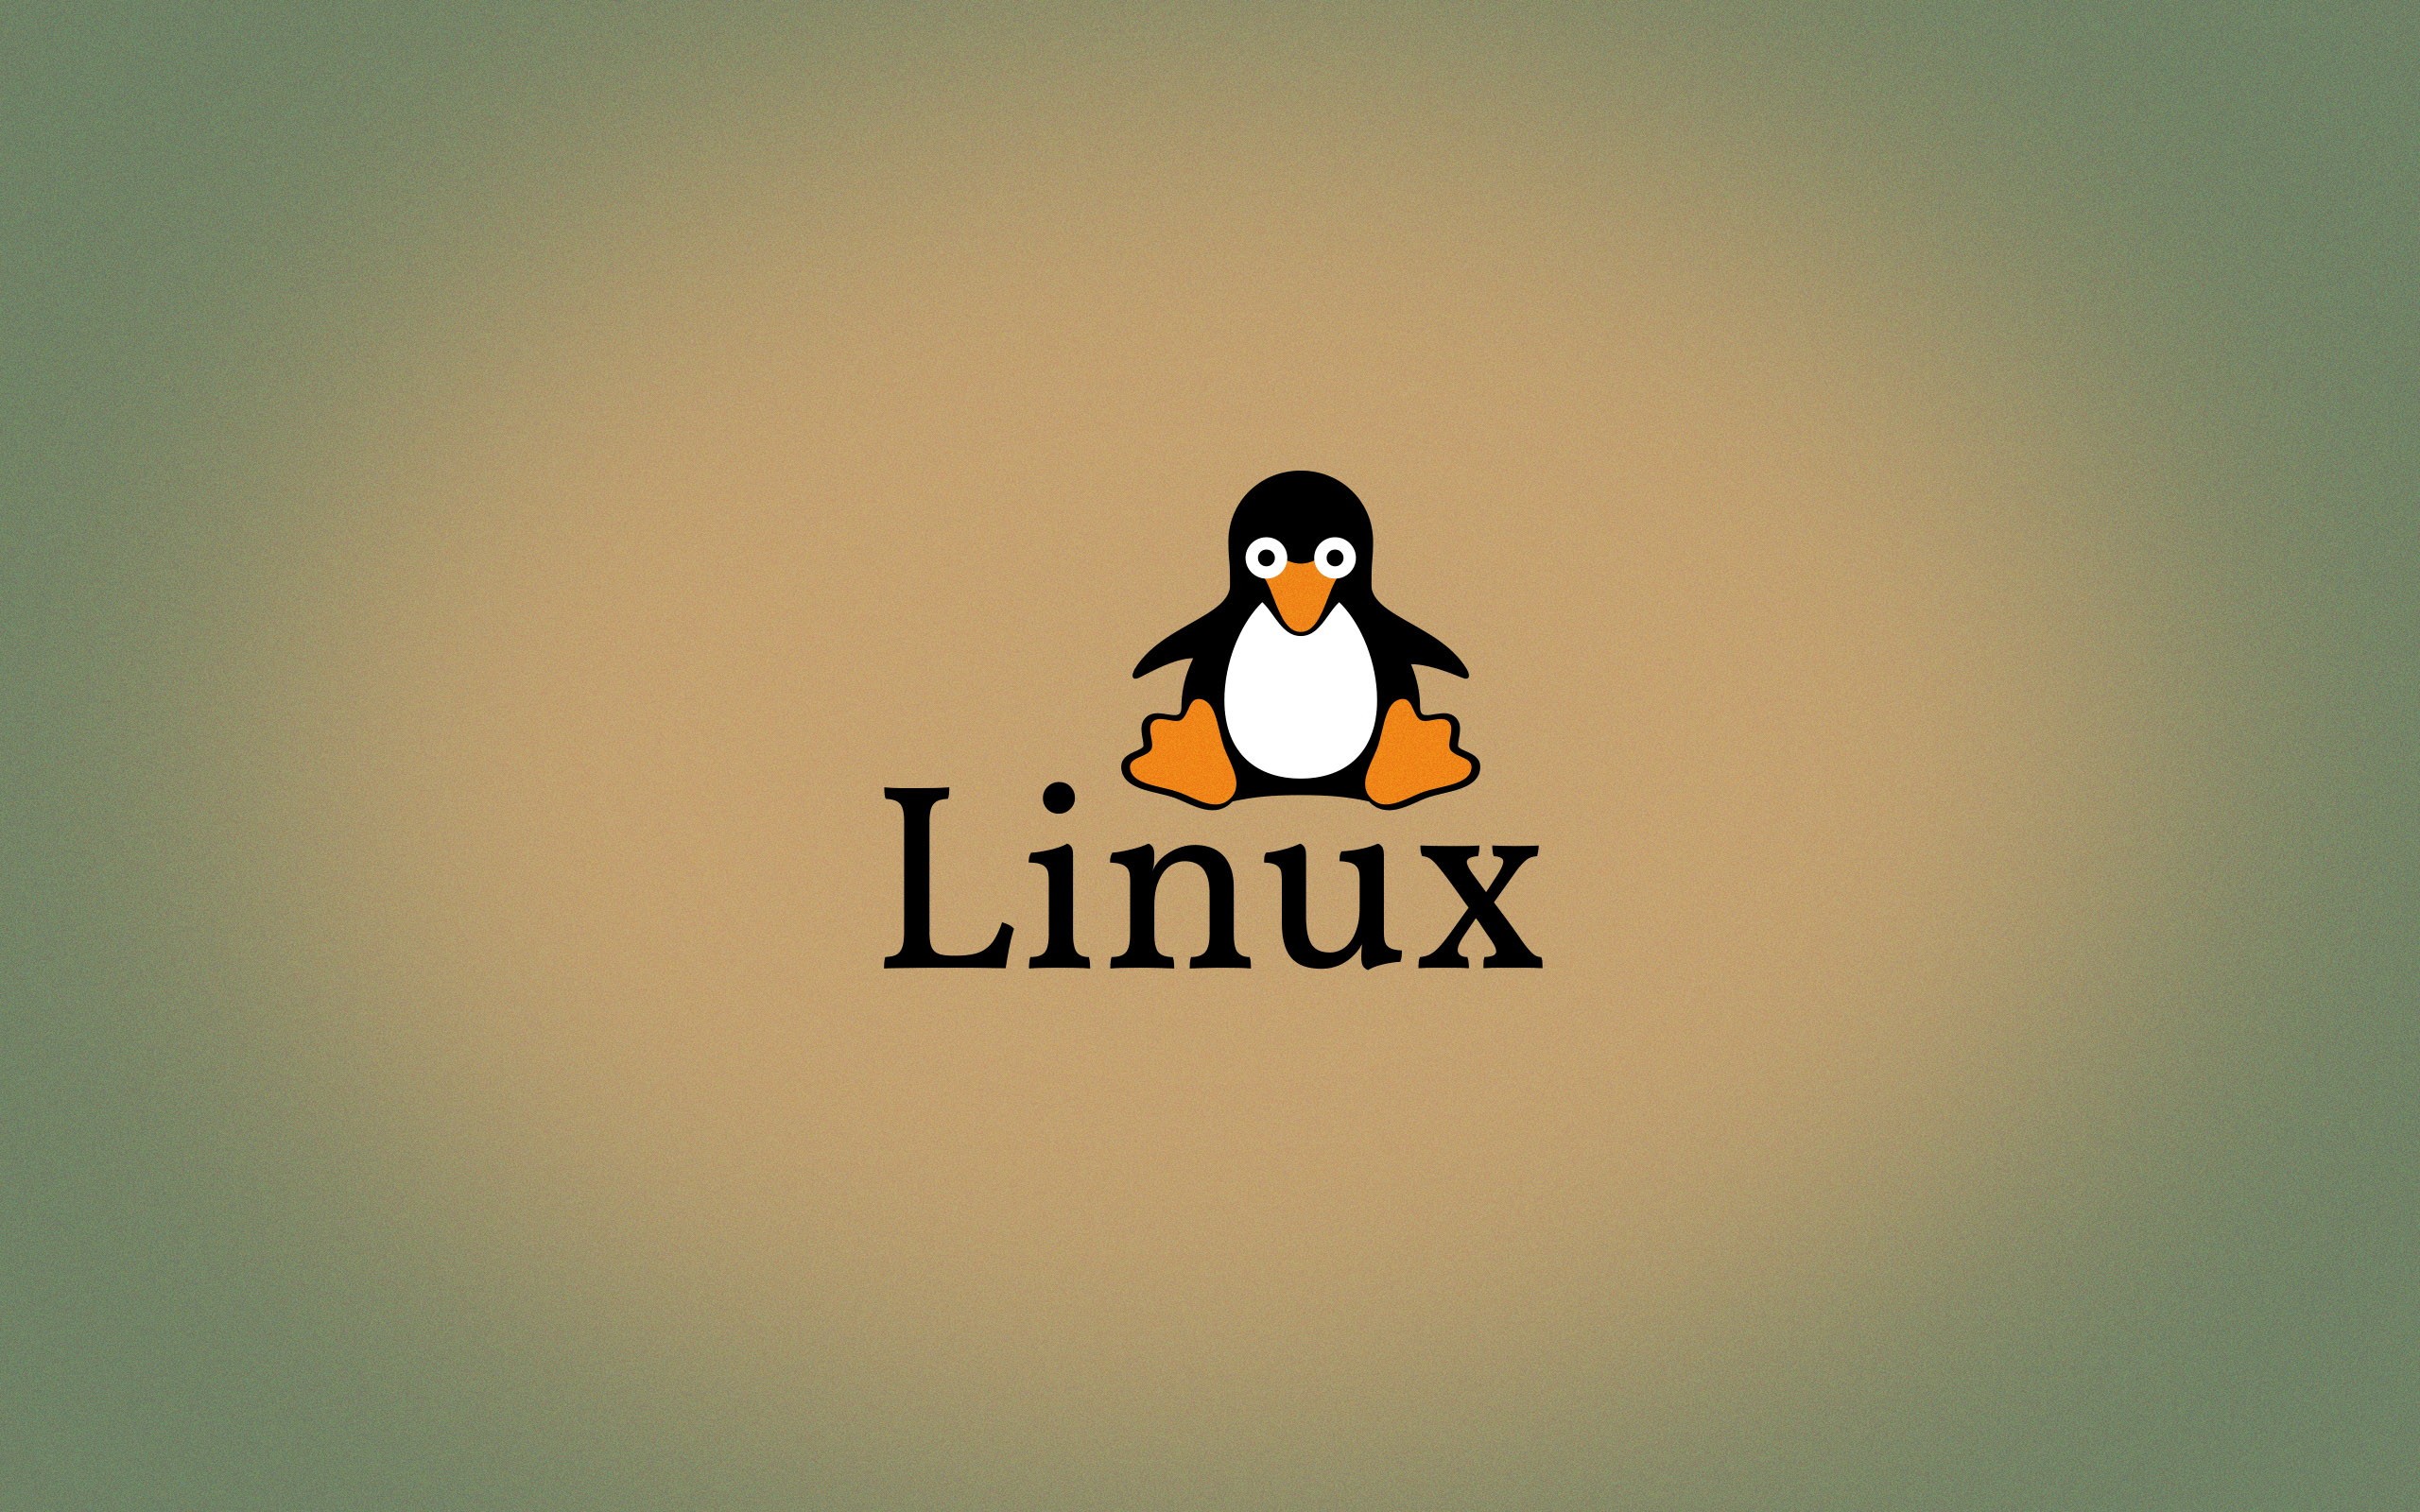 Linux常用命令